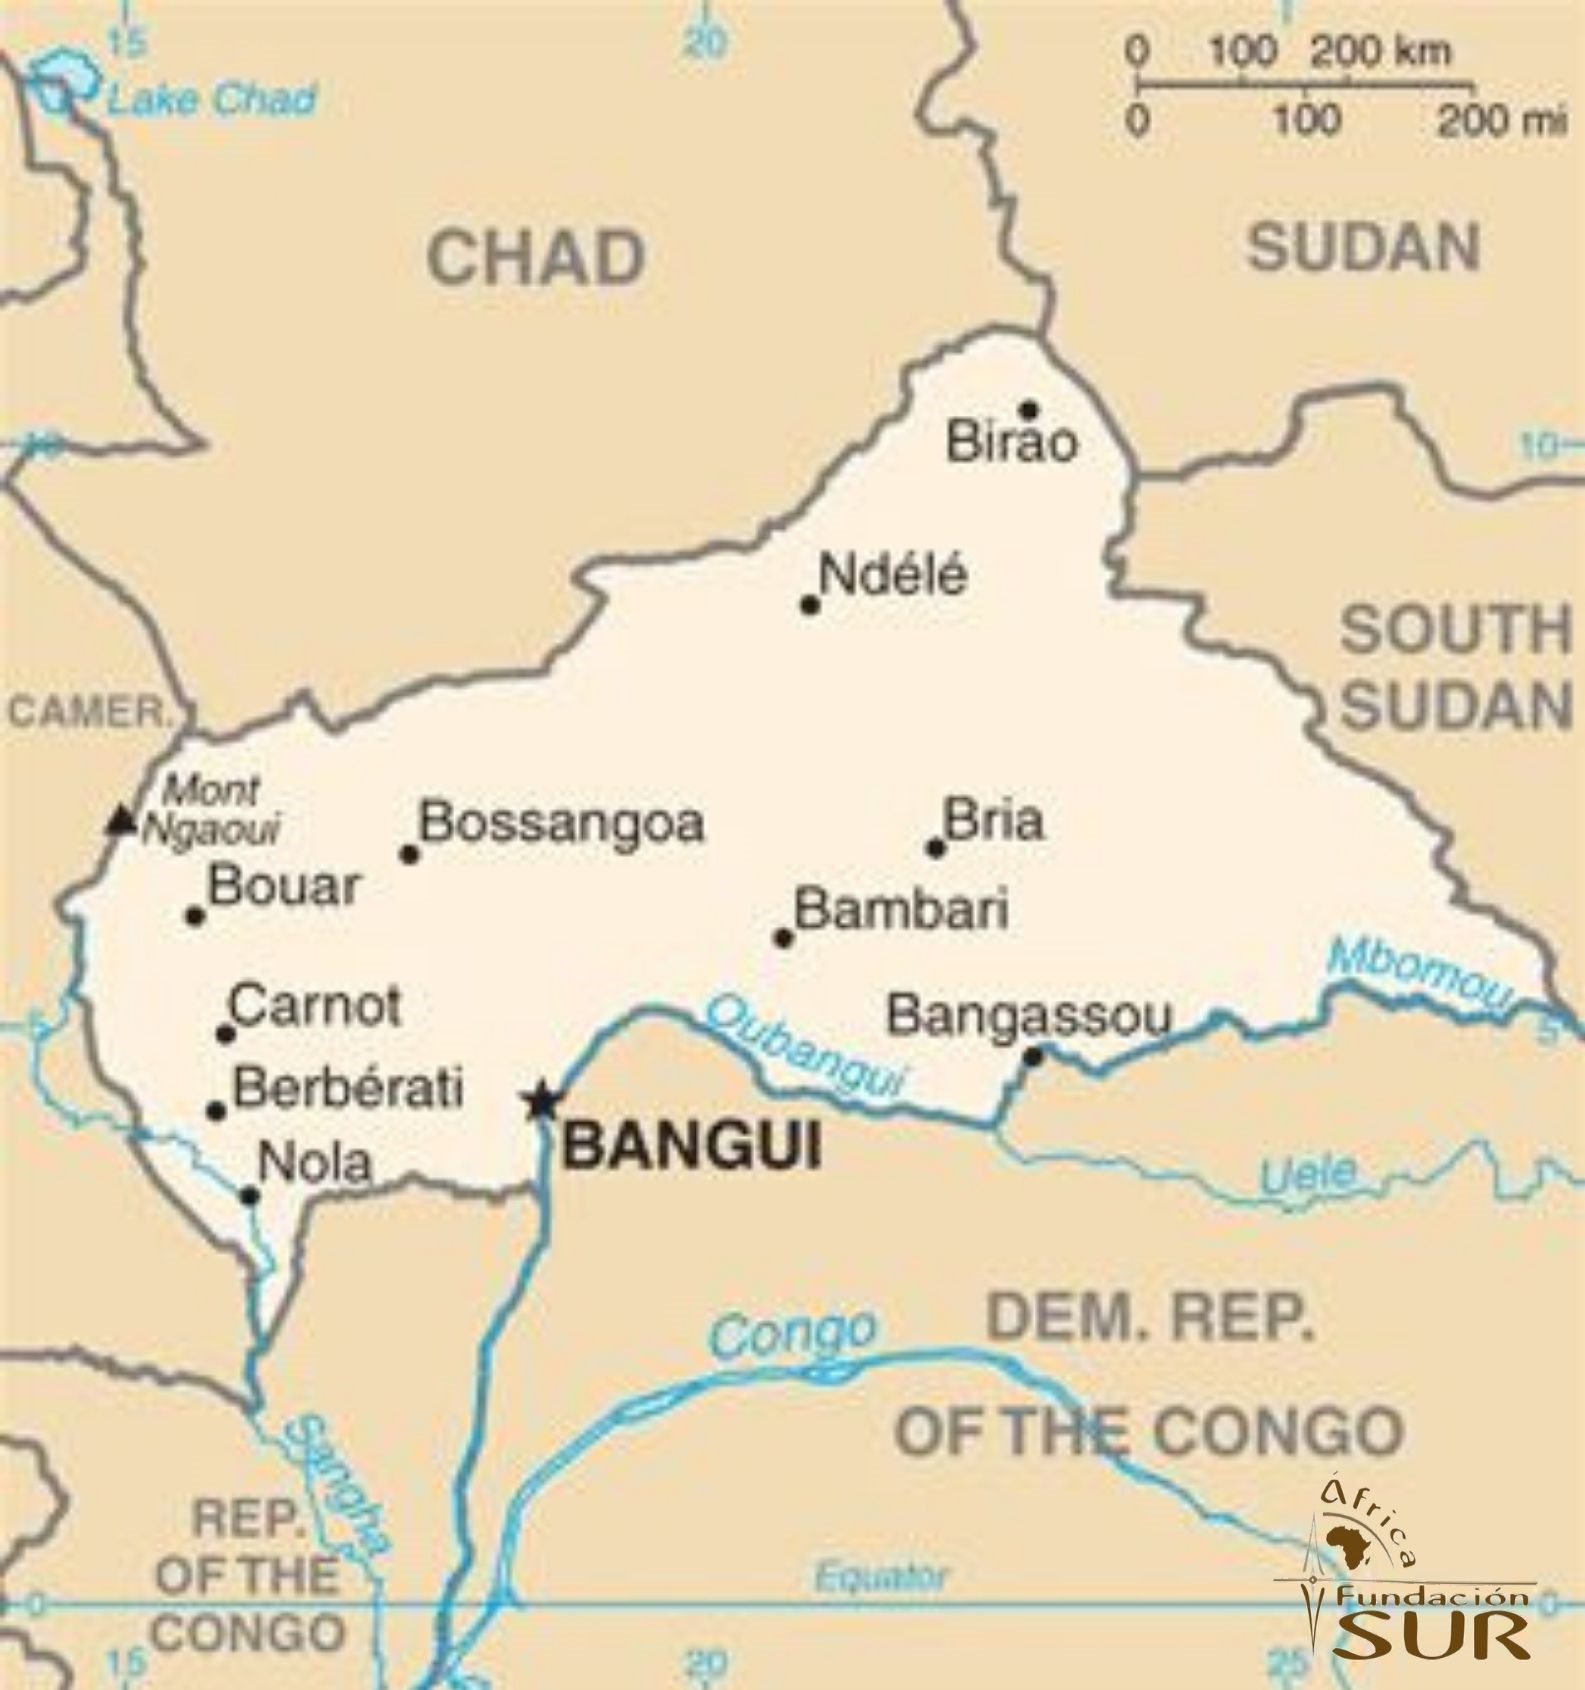 mapa_republica_centroafricana_mapa_cc0-3.jpg